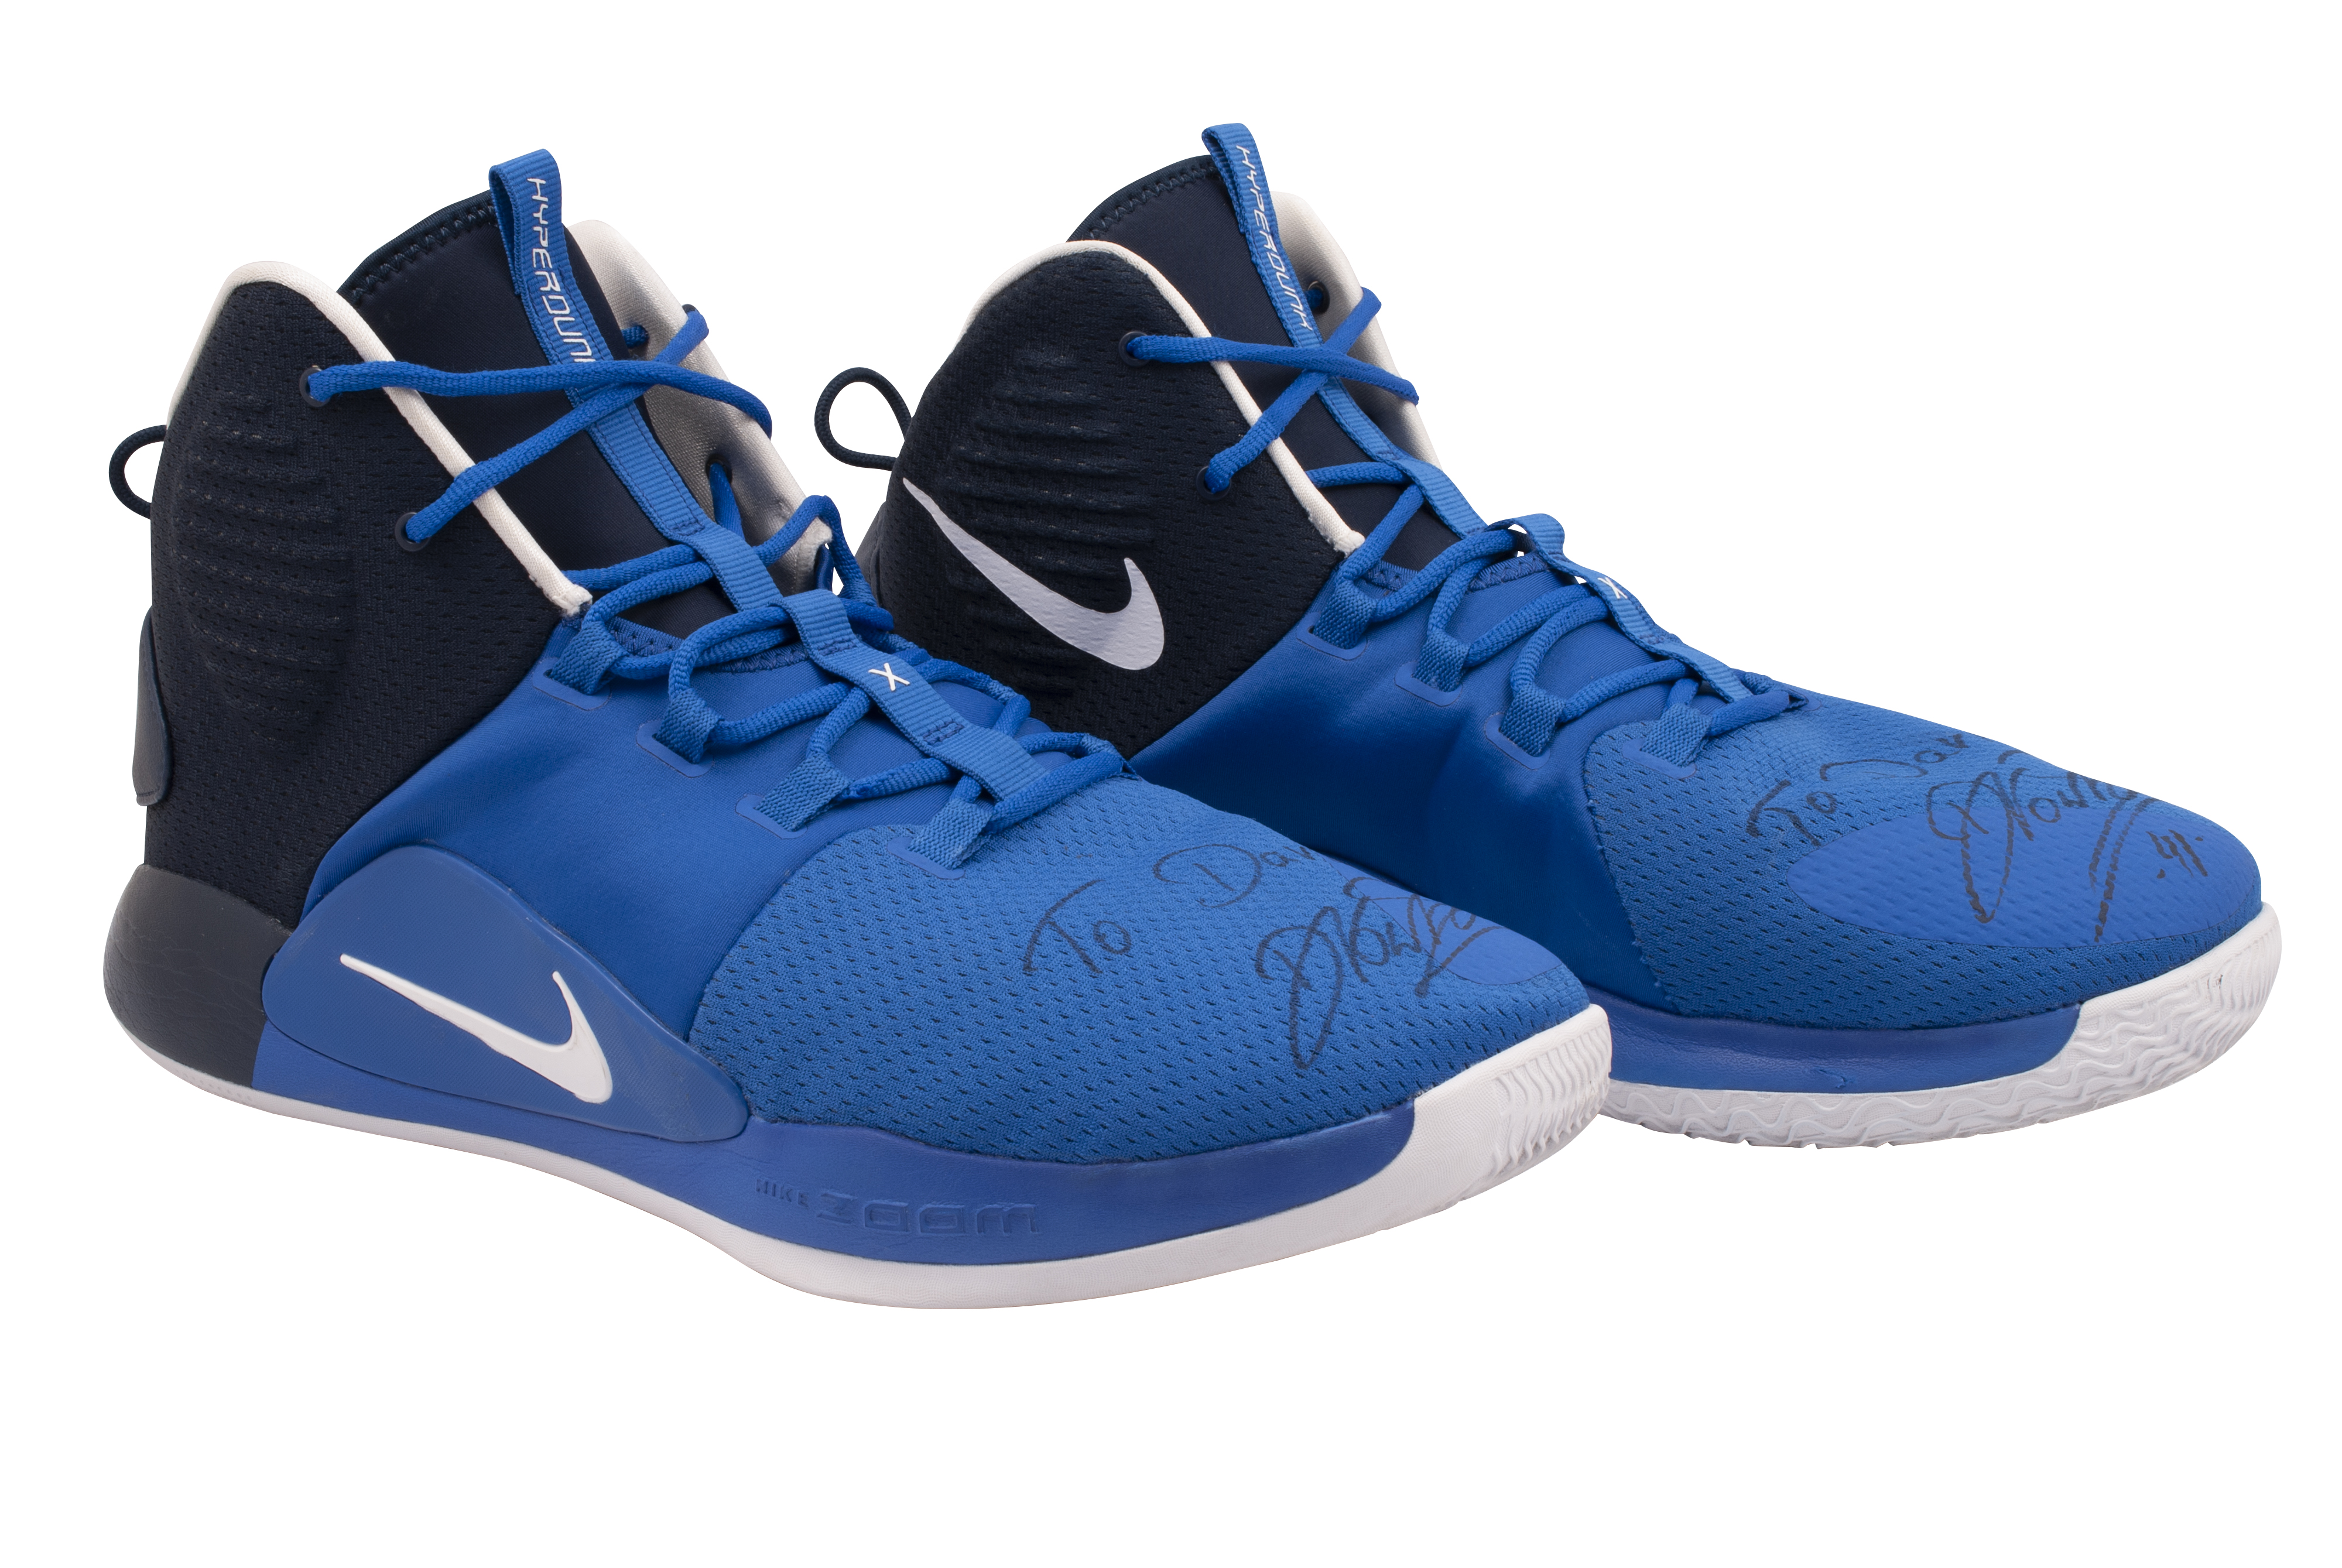 Dirk Nowitzki Signed Nike Hyperdunk Basketball Shoe (Fanatics Hologram)